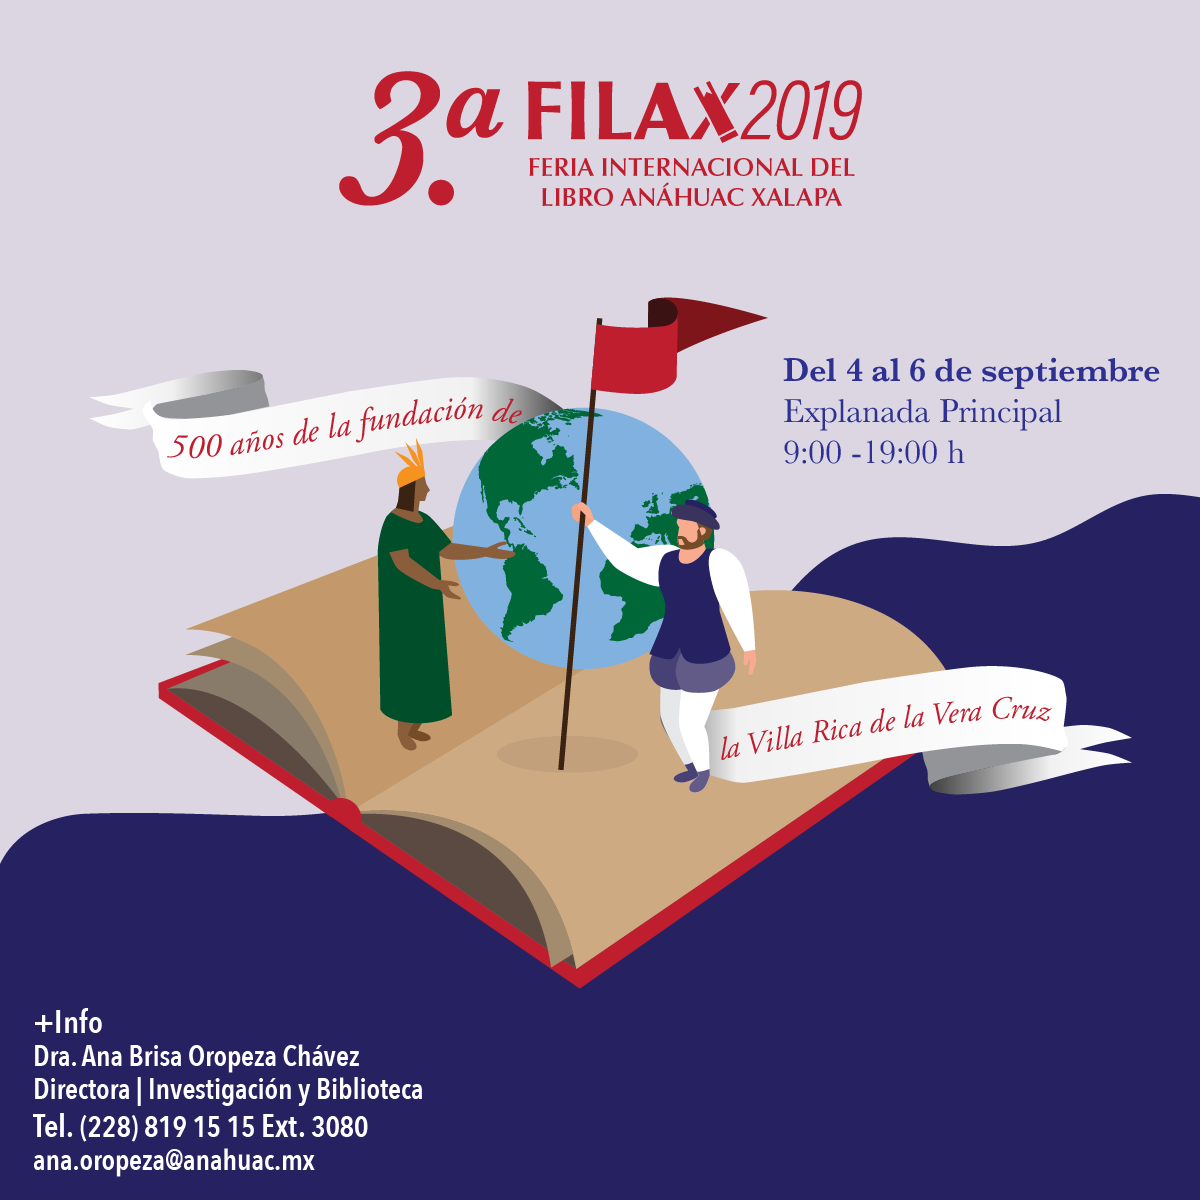 3.a FILAX 2019: Feria Internacional del Libro Anáhuac Xalapa